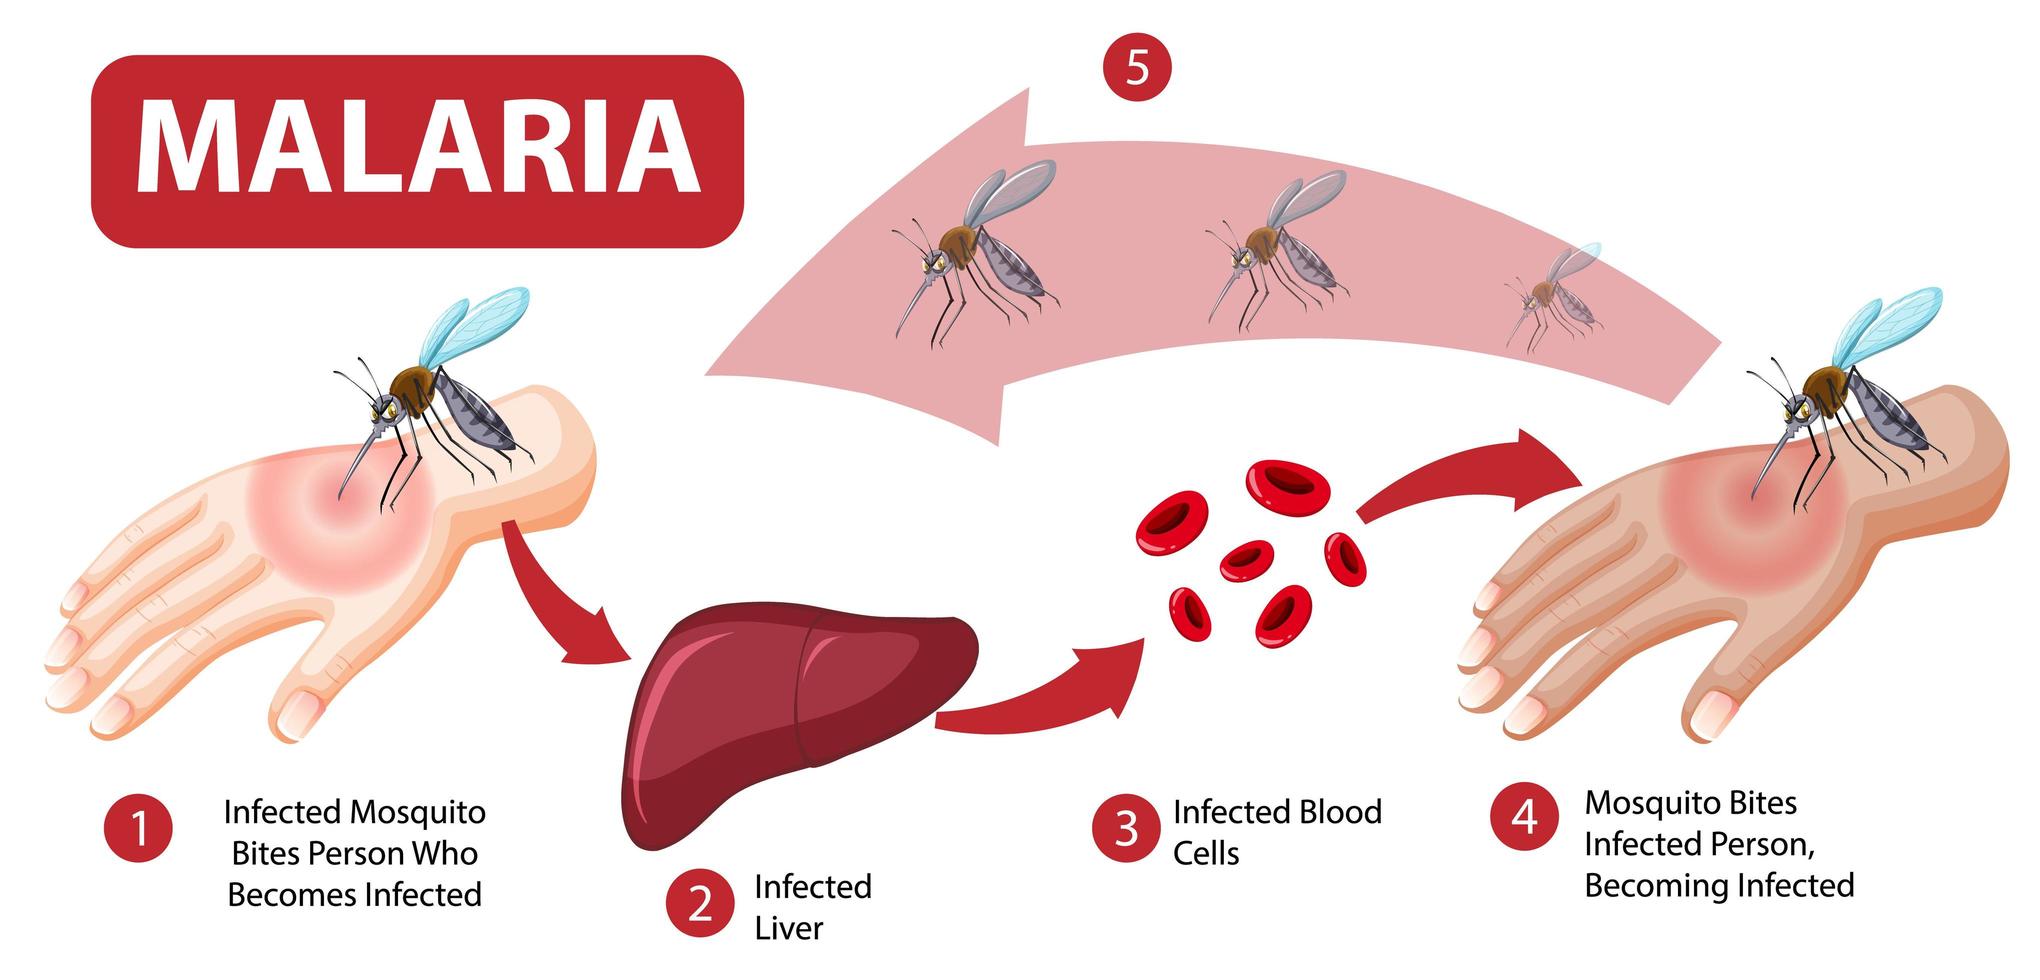 Malaria symptom information infographic vector